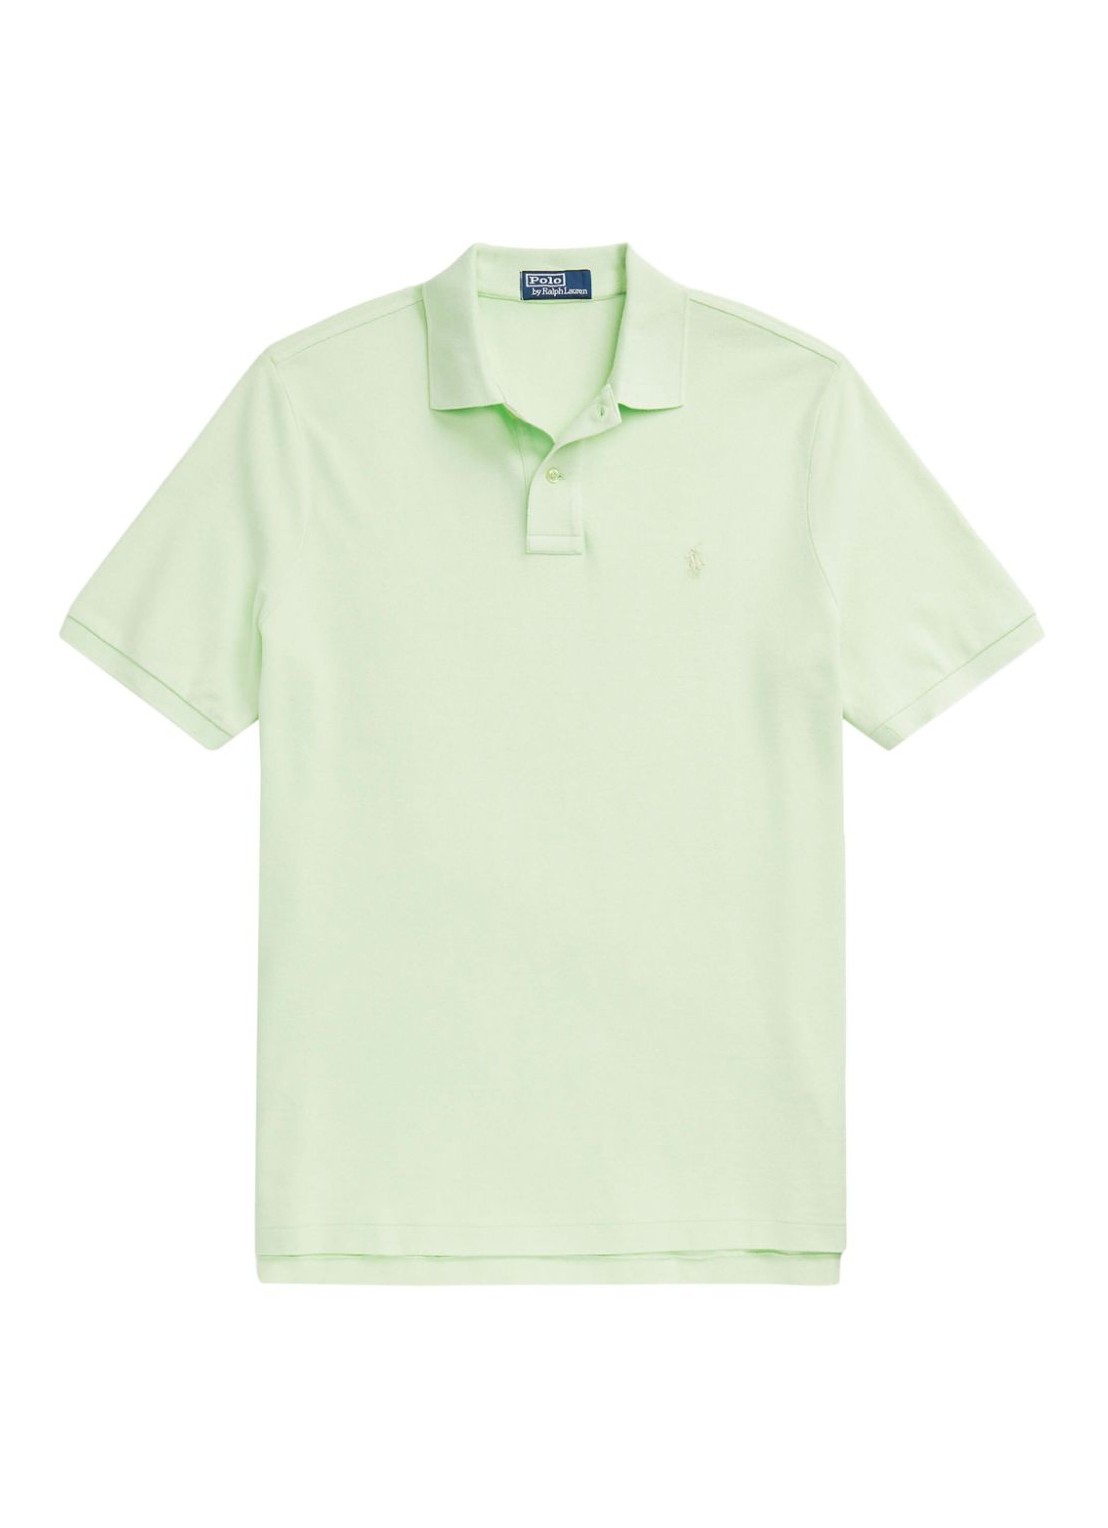 Polo polo ralph lauren polo man sskcclsm1-short sleeve-polo shirt 710910898003 leaf talla verde
 